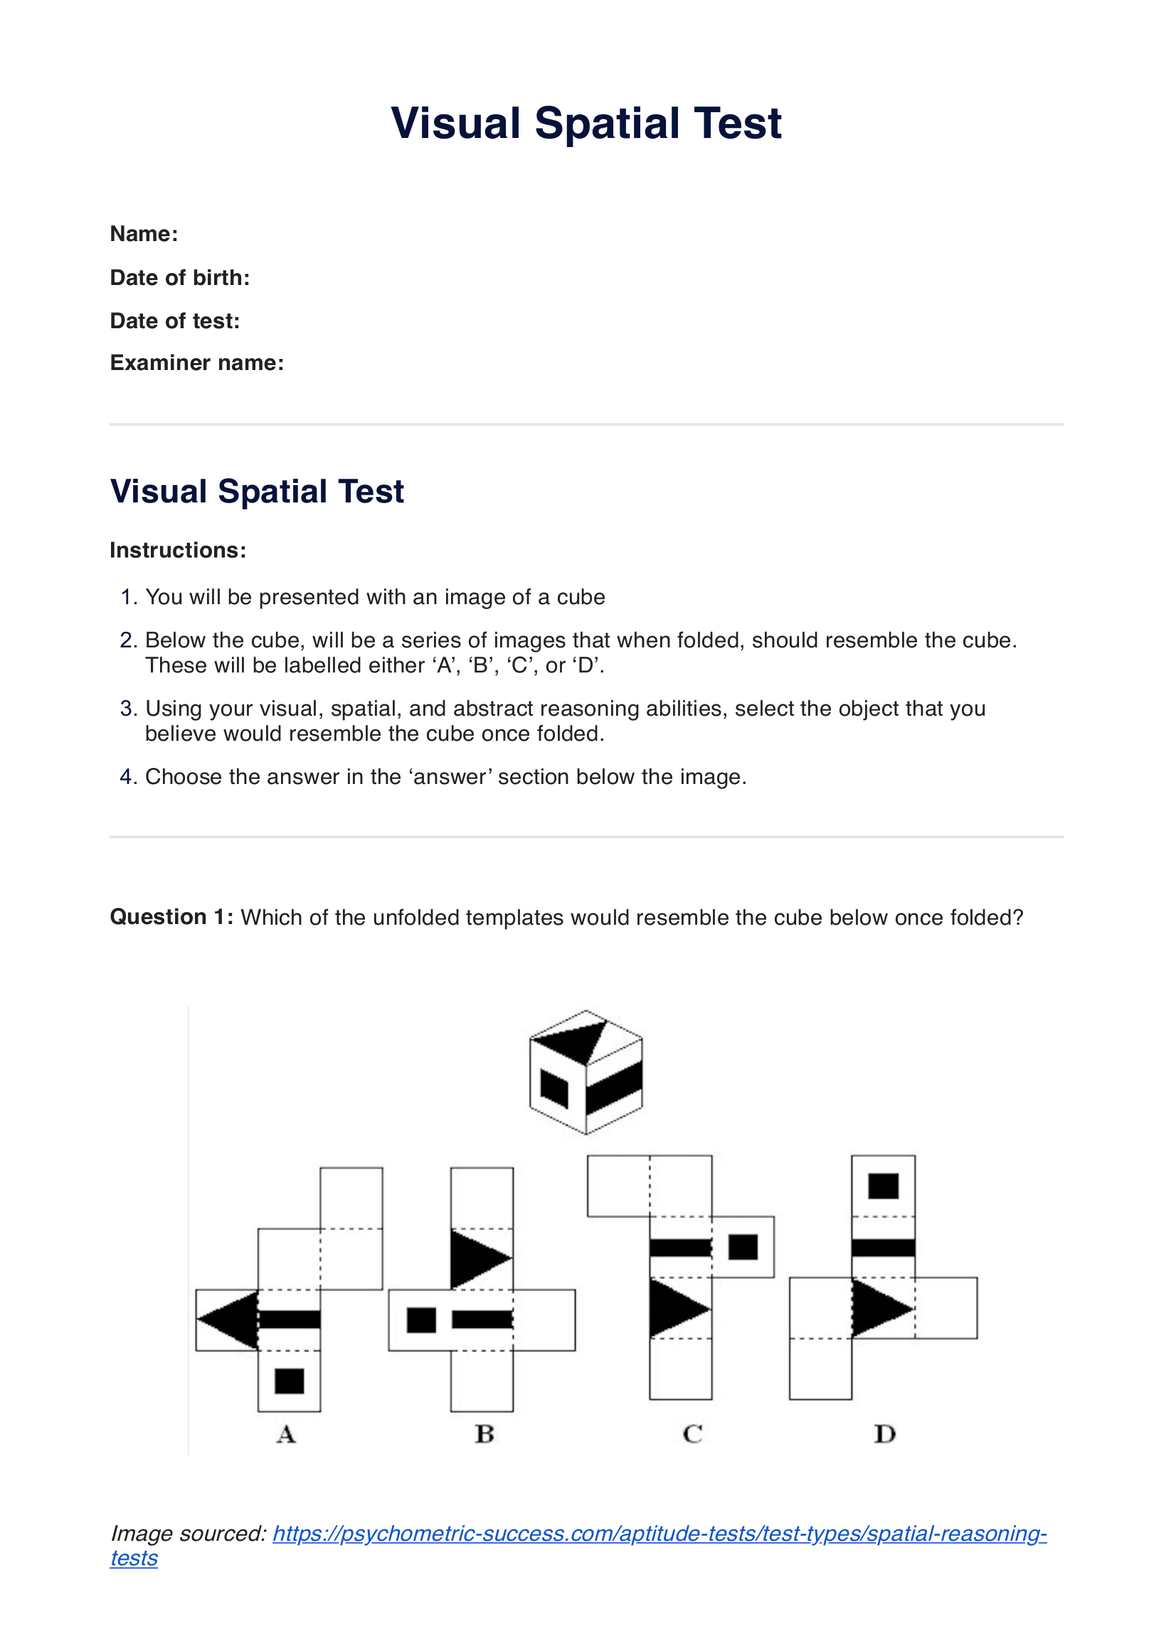 Visual Spatial Test PDF Example